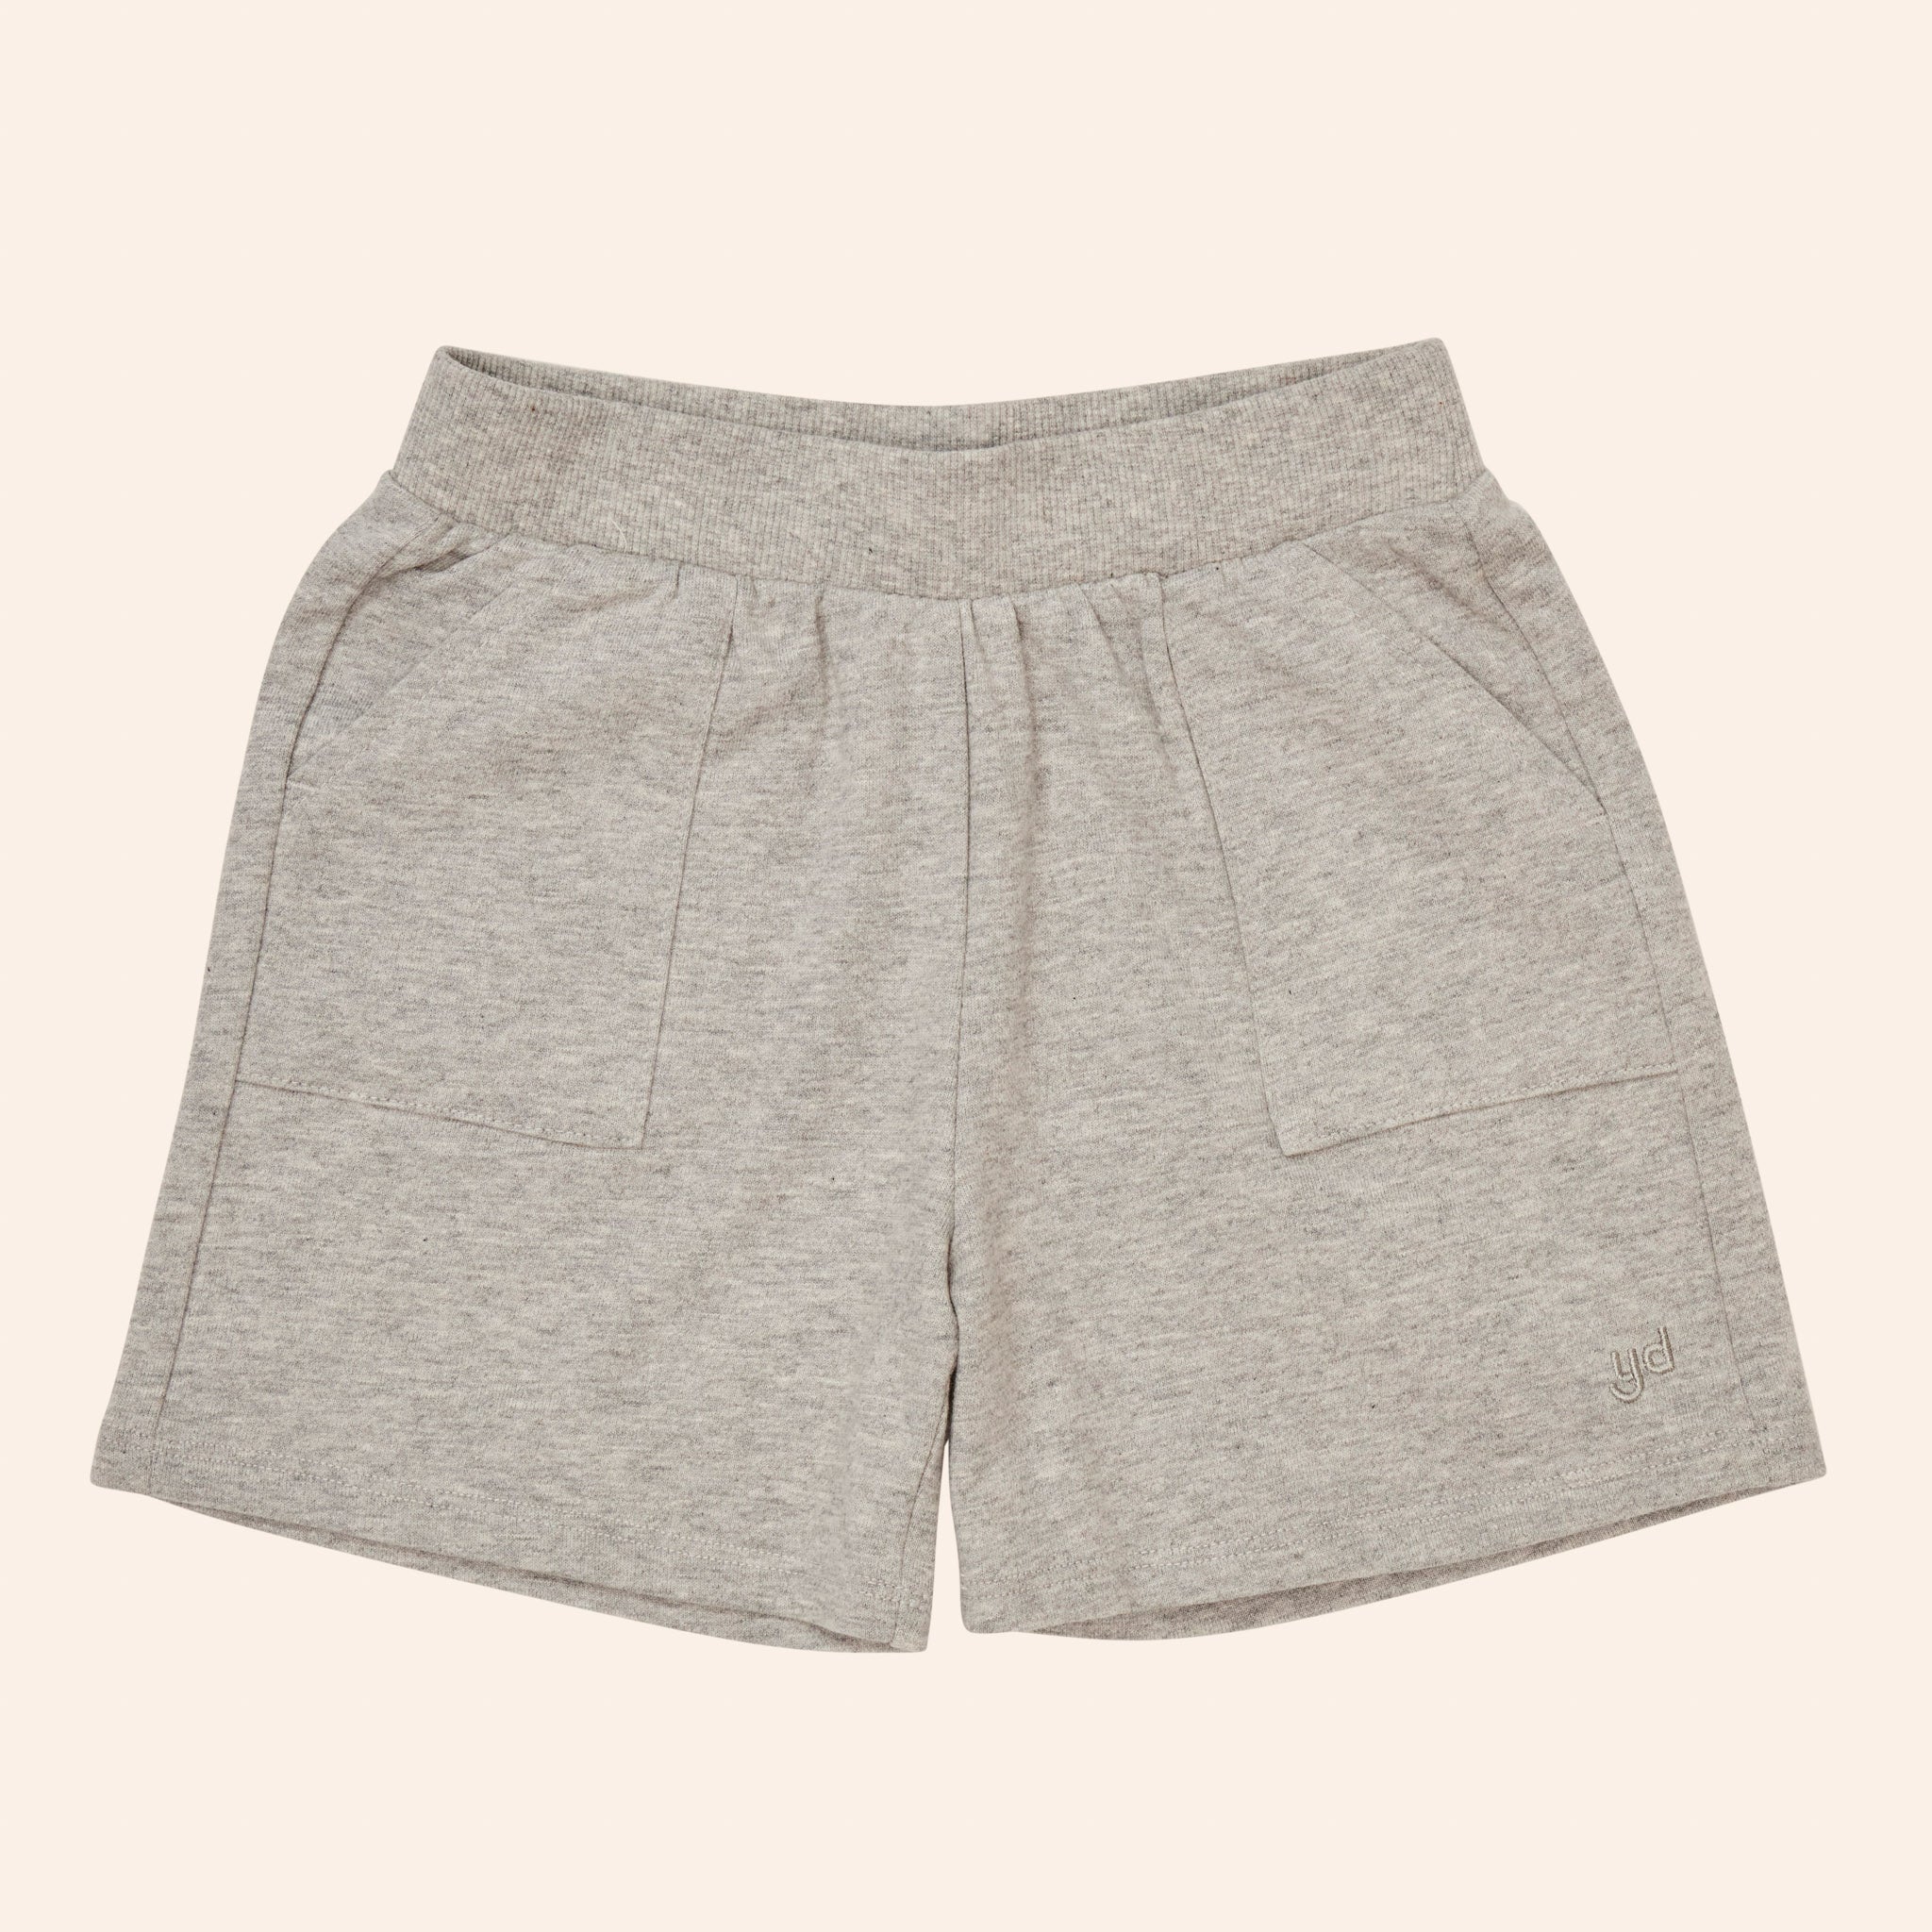 Maui Shorts (Light Grey Heather)